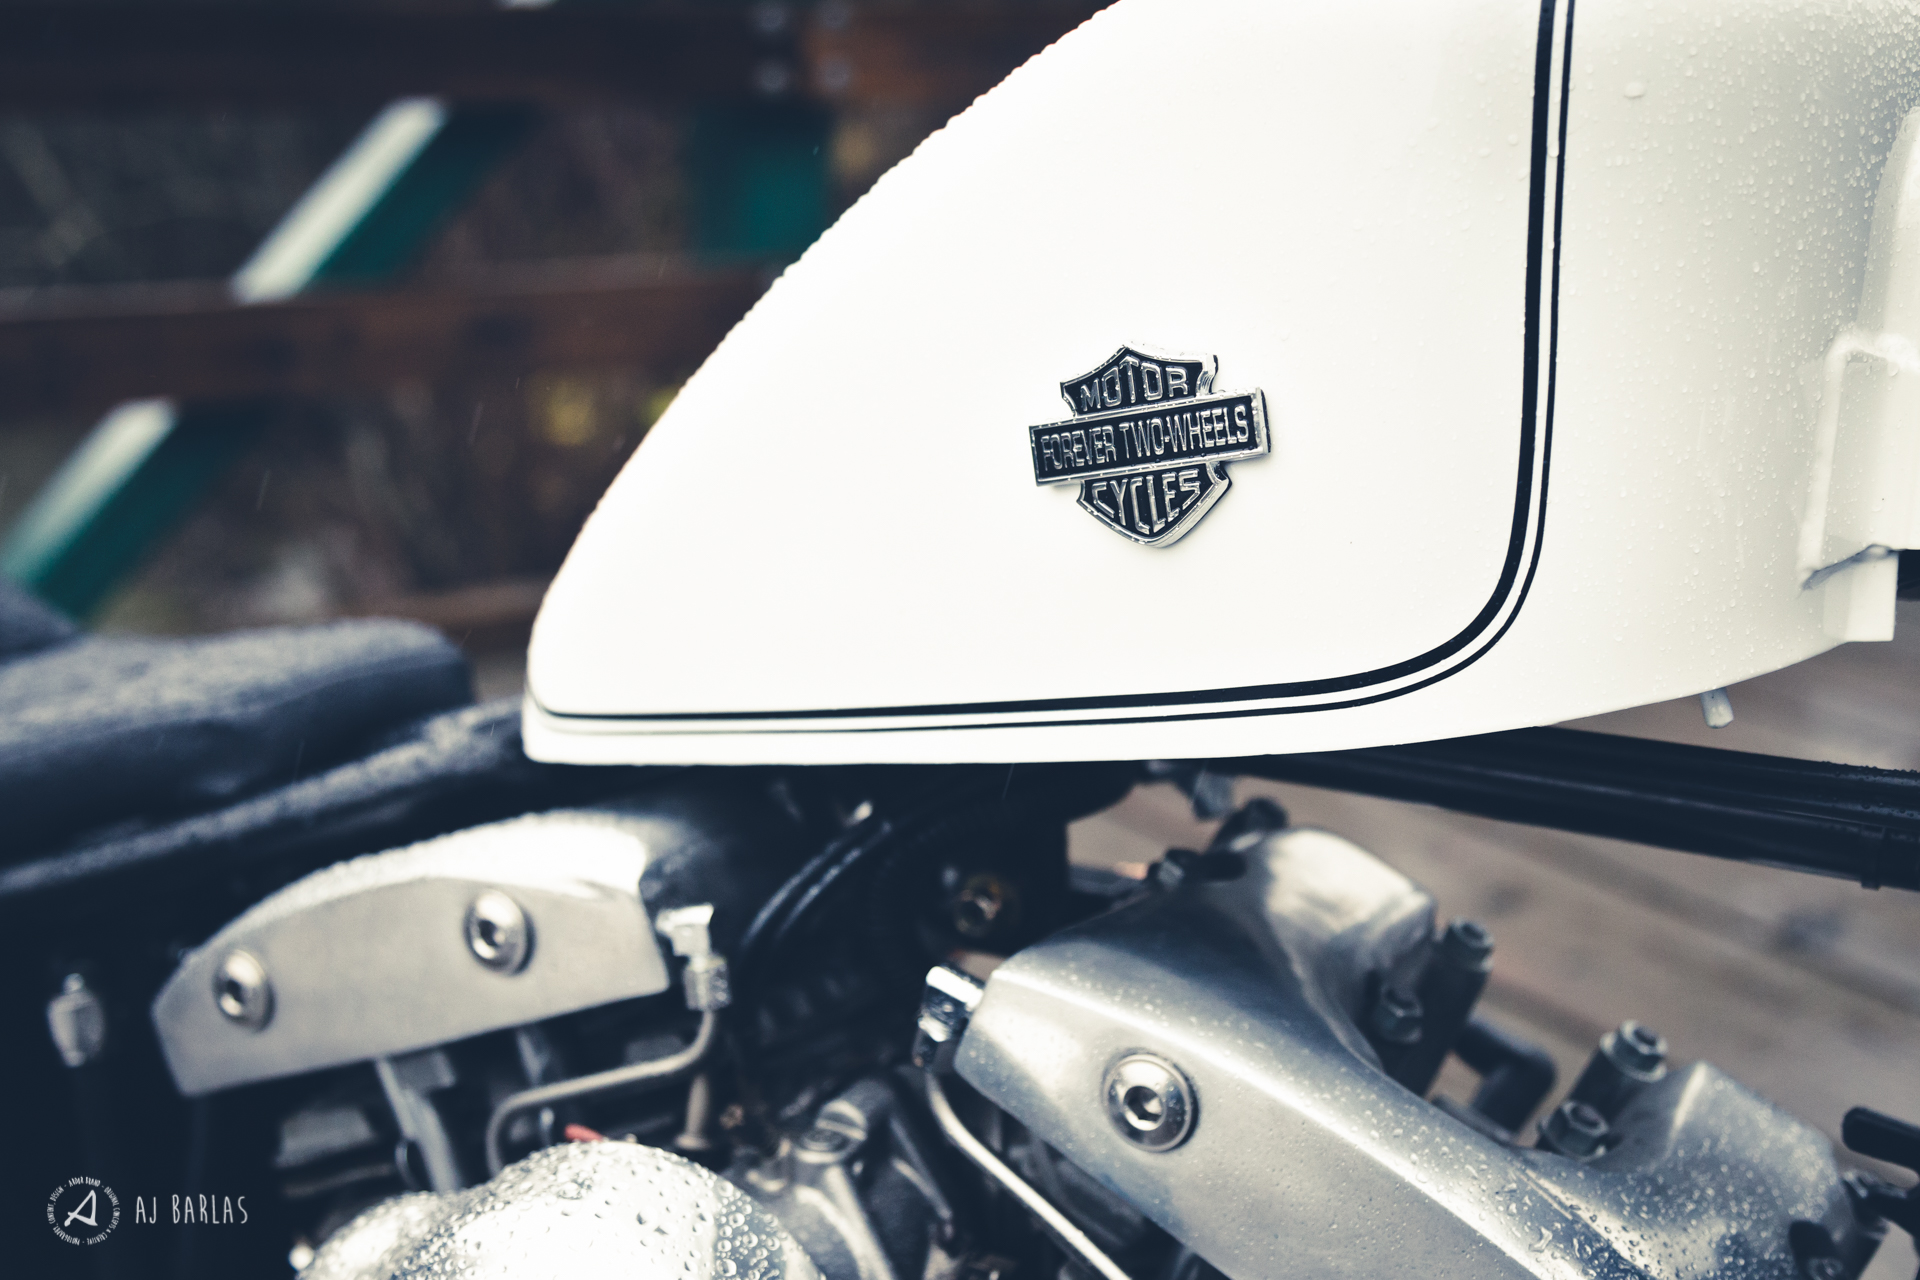 Todd Schumlick's custom 1975 Harley Davidson Shovelhead badge